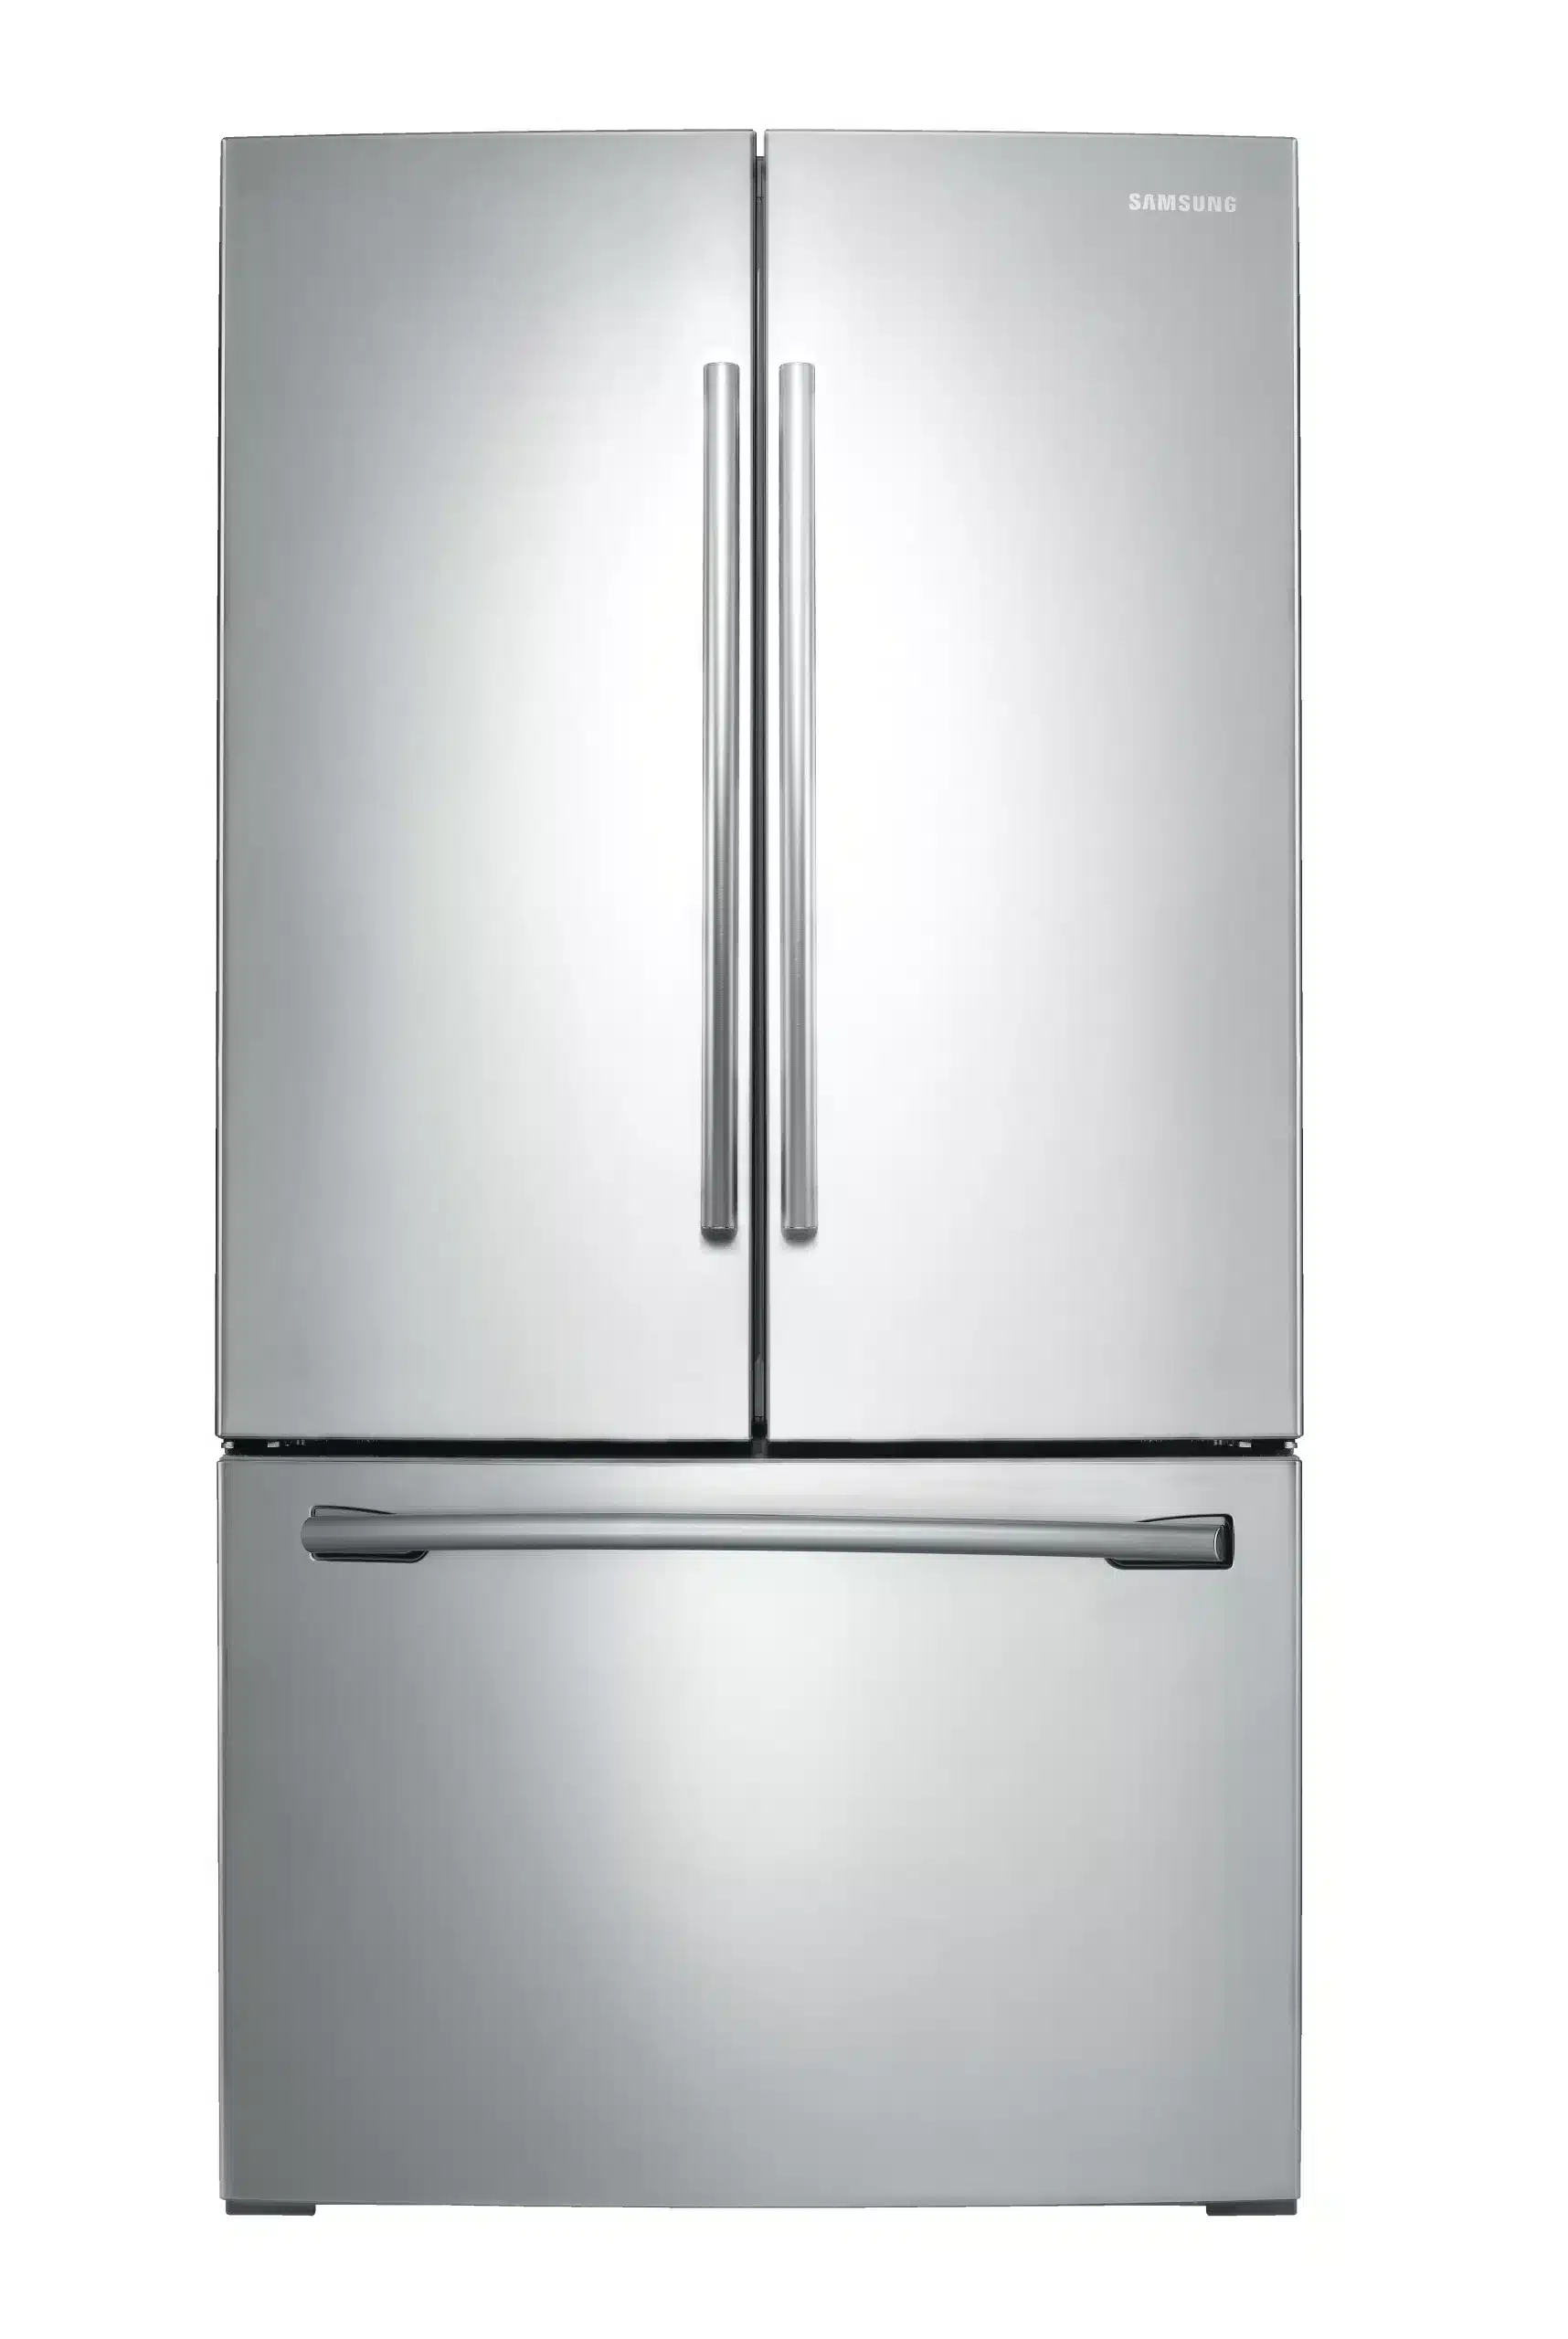 what-is-power-freeze-on-samsung-fridge